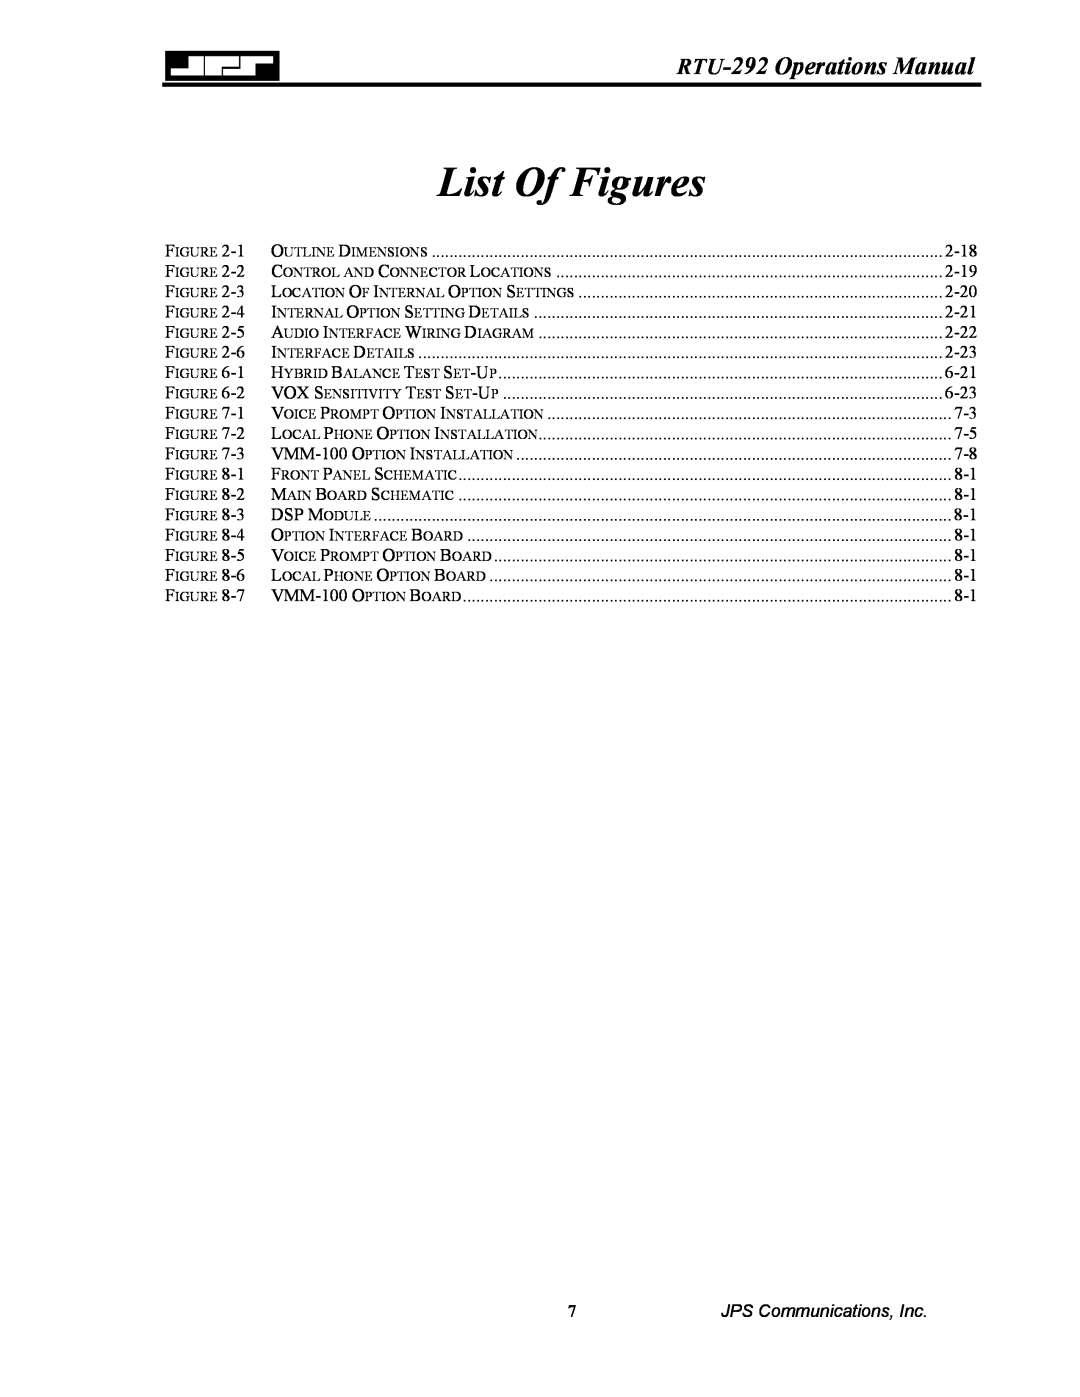 Nortel Networks operation manual List Of Figures, RTU-292 Operations Manual, JPS Communications, Inc 